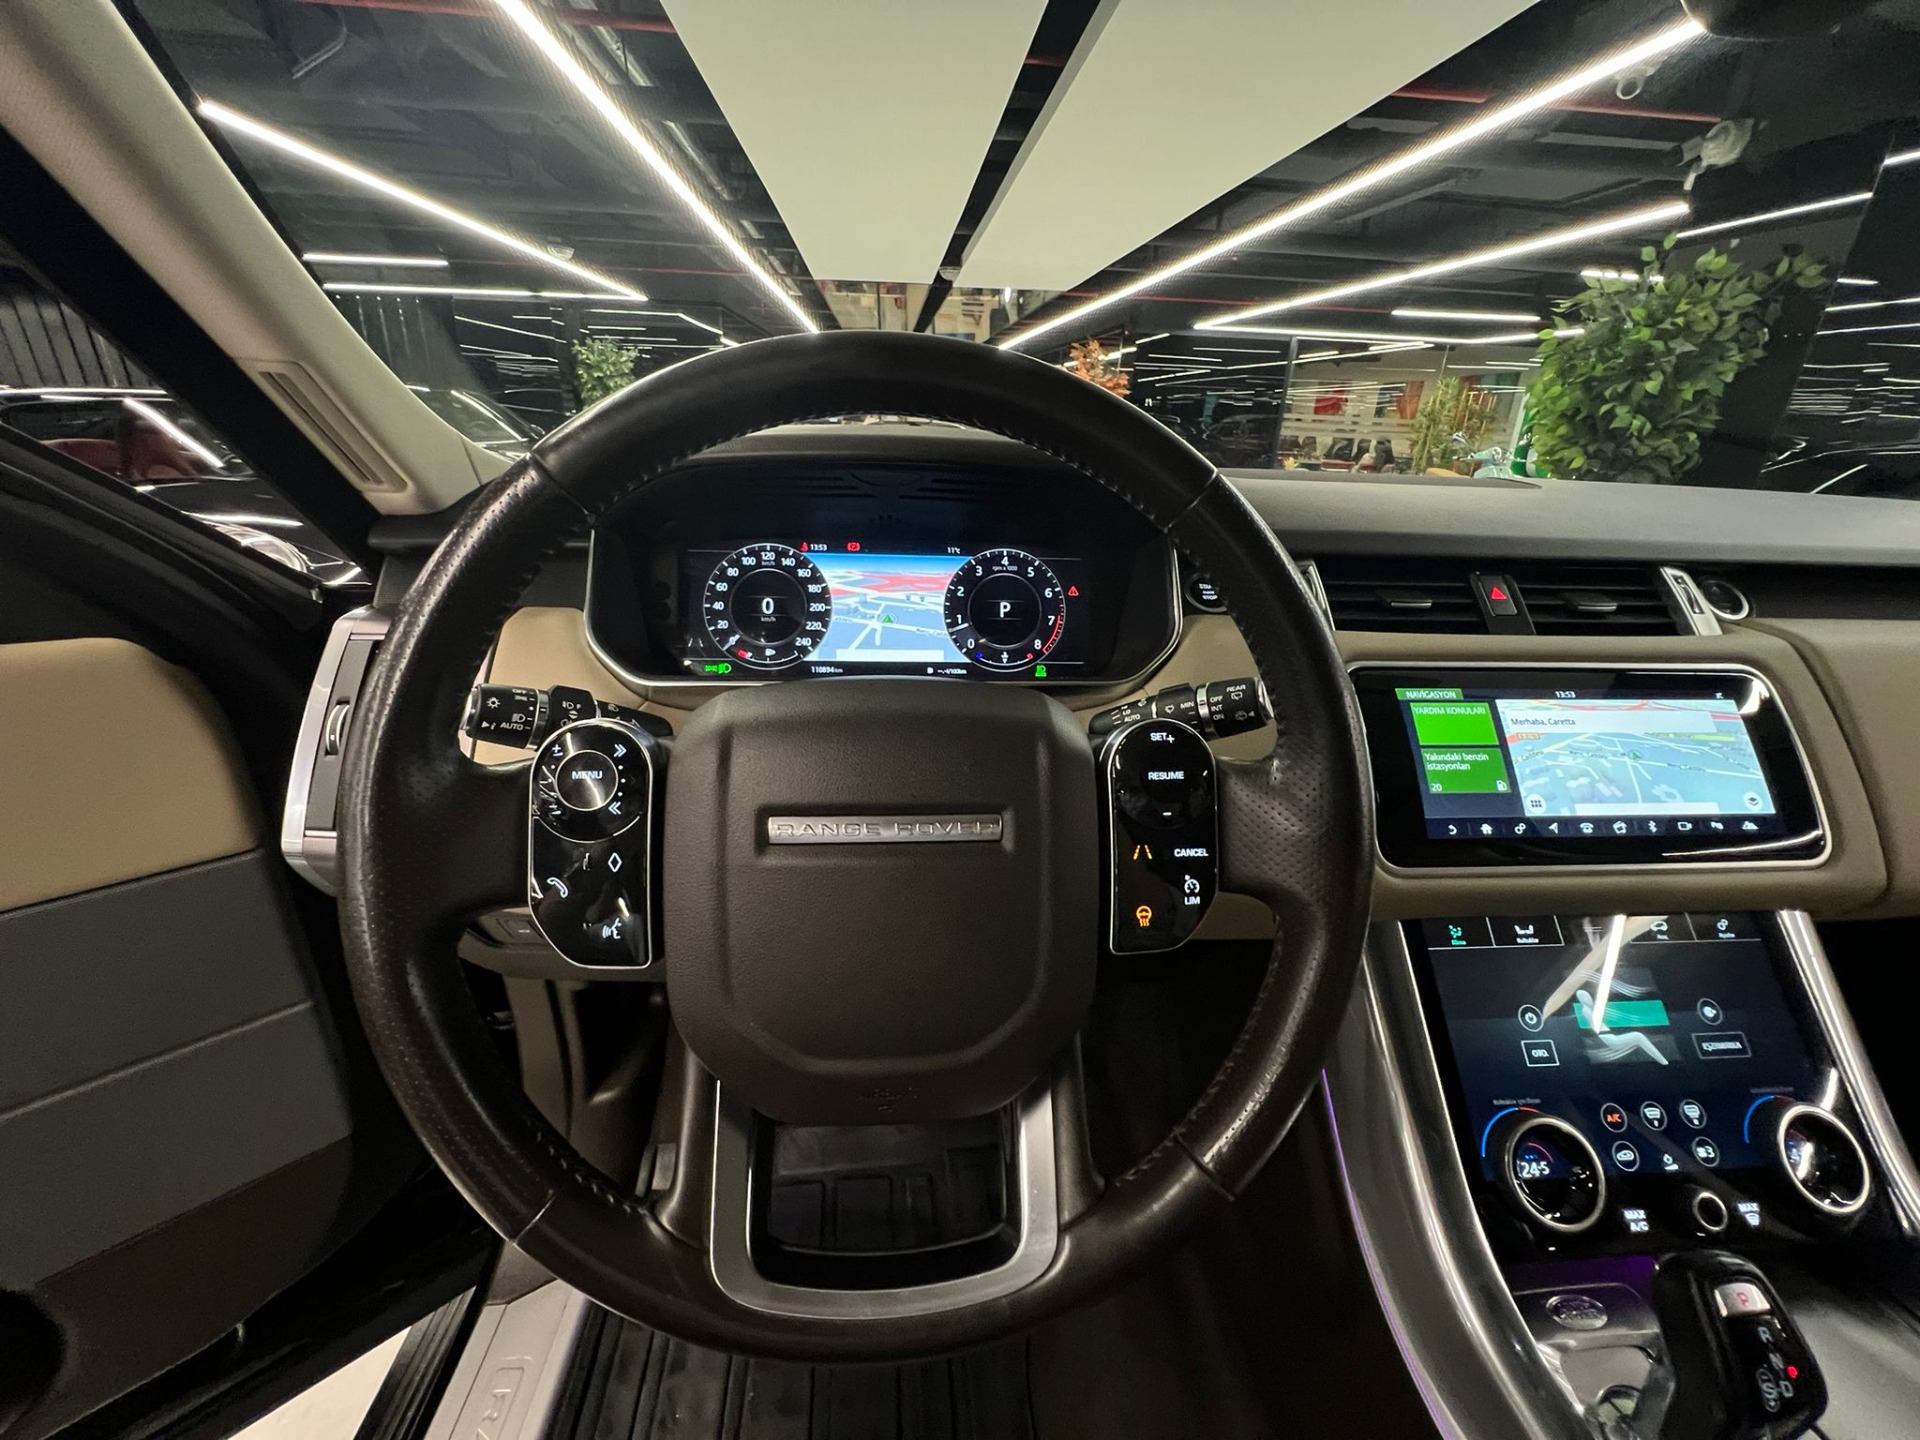 2019 Model Range Rover Sport 2.0 HSE Plus-14